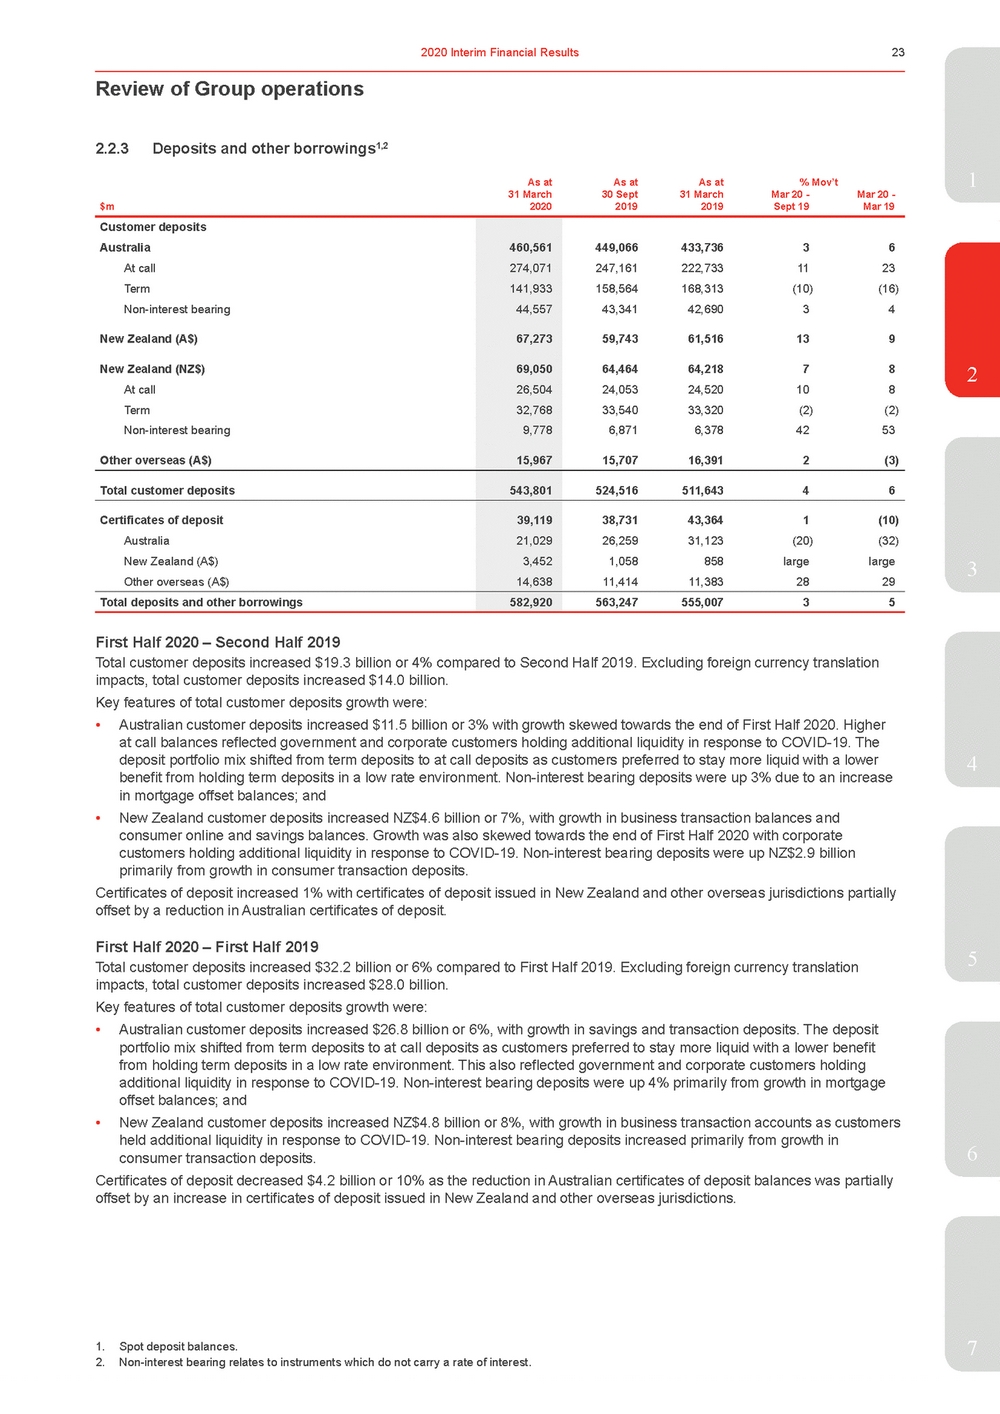 11676-3-ex1_westpac 2020 interim financial results announcement_page_028.jpg